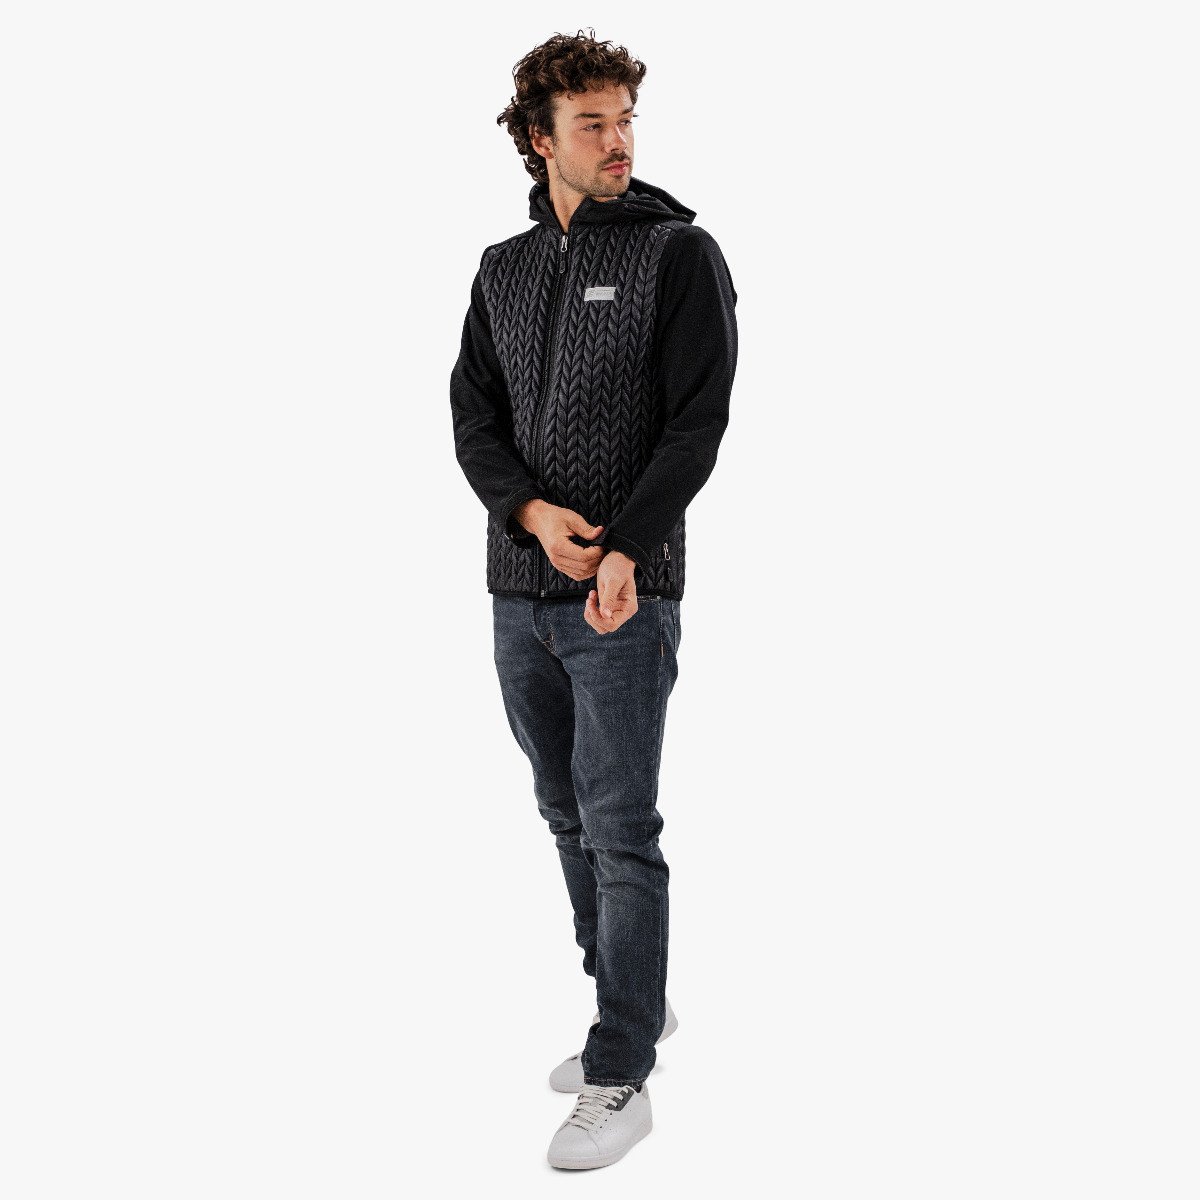 classy hoodie jacket scicon sports black scjw5502